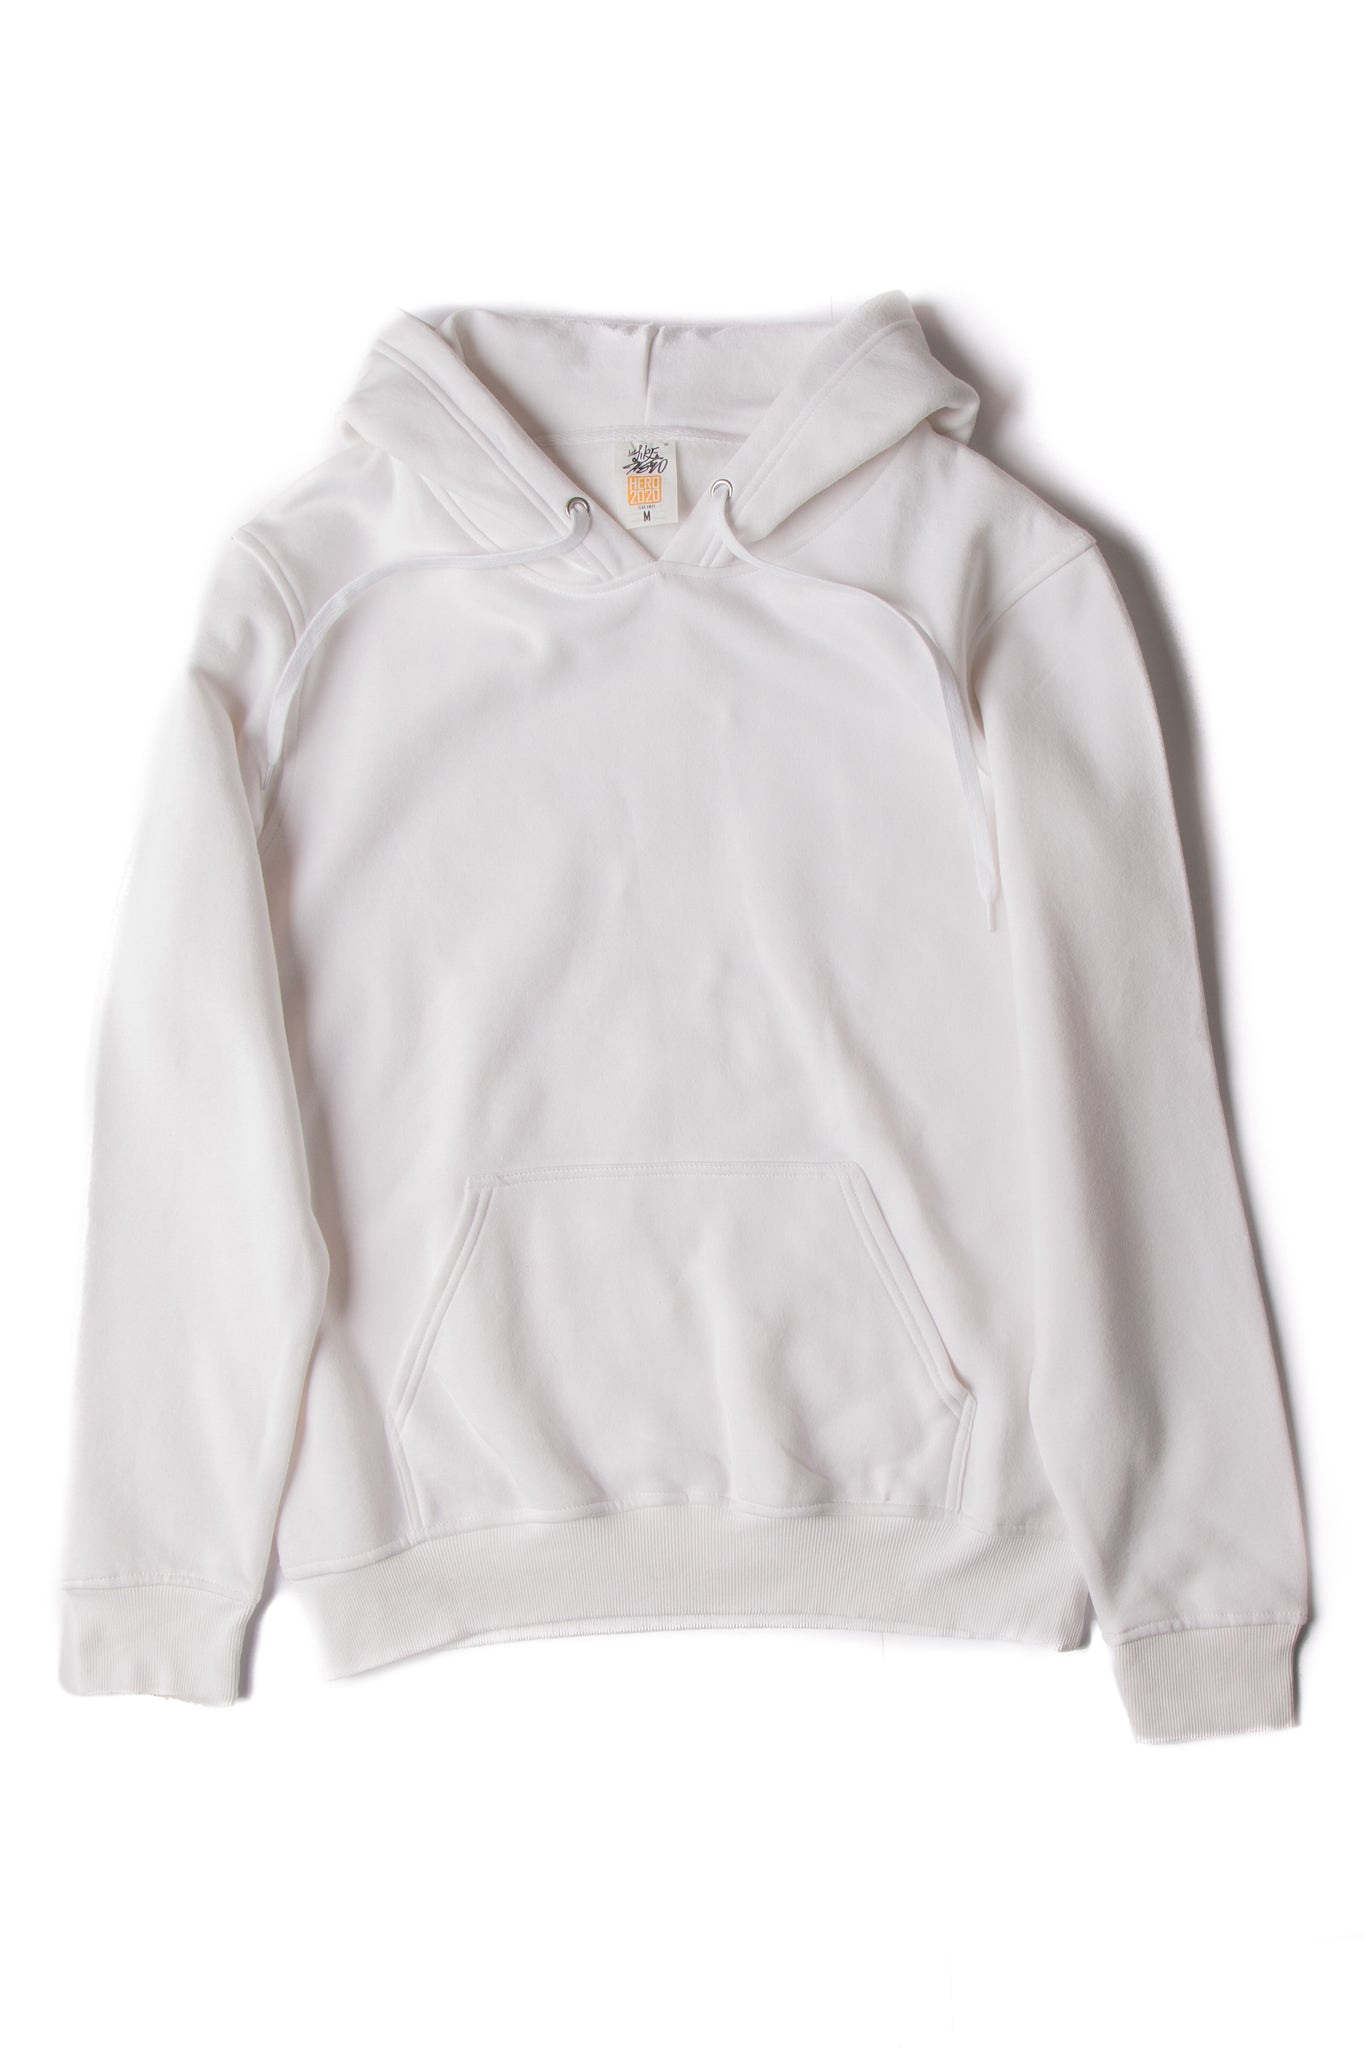 Wholesale Blank Hoodies Sweatshirts Apparel In Canada | Free Shipping – Like Hero